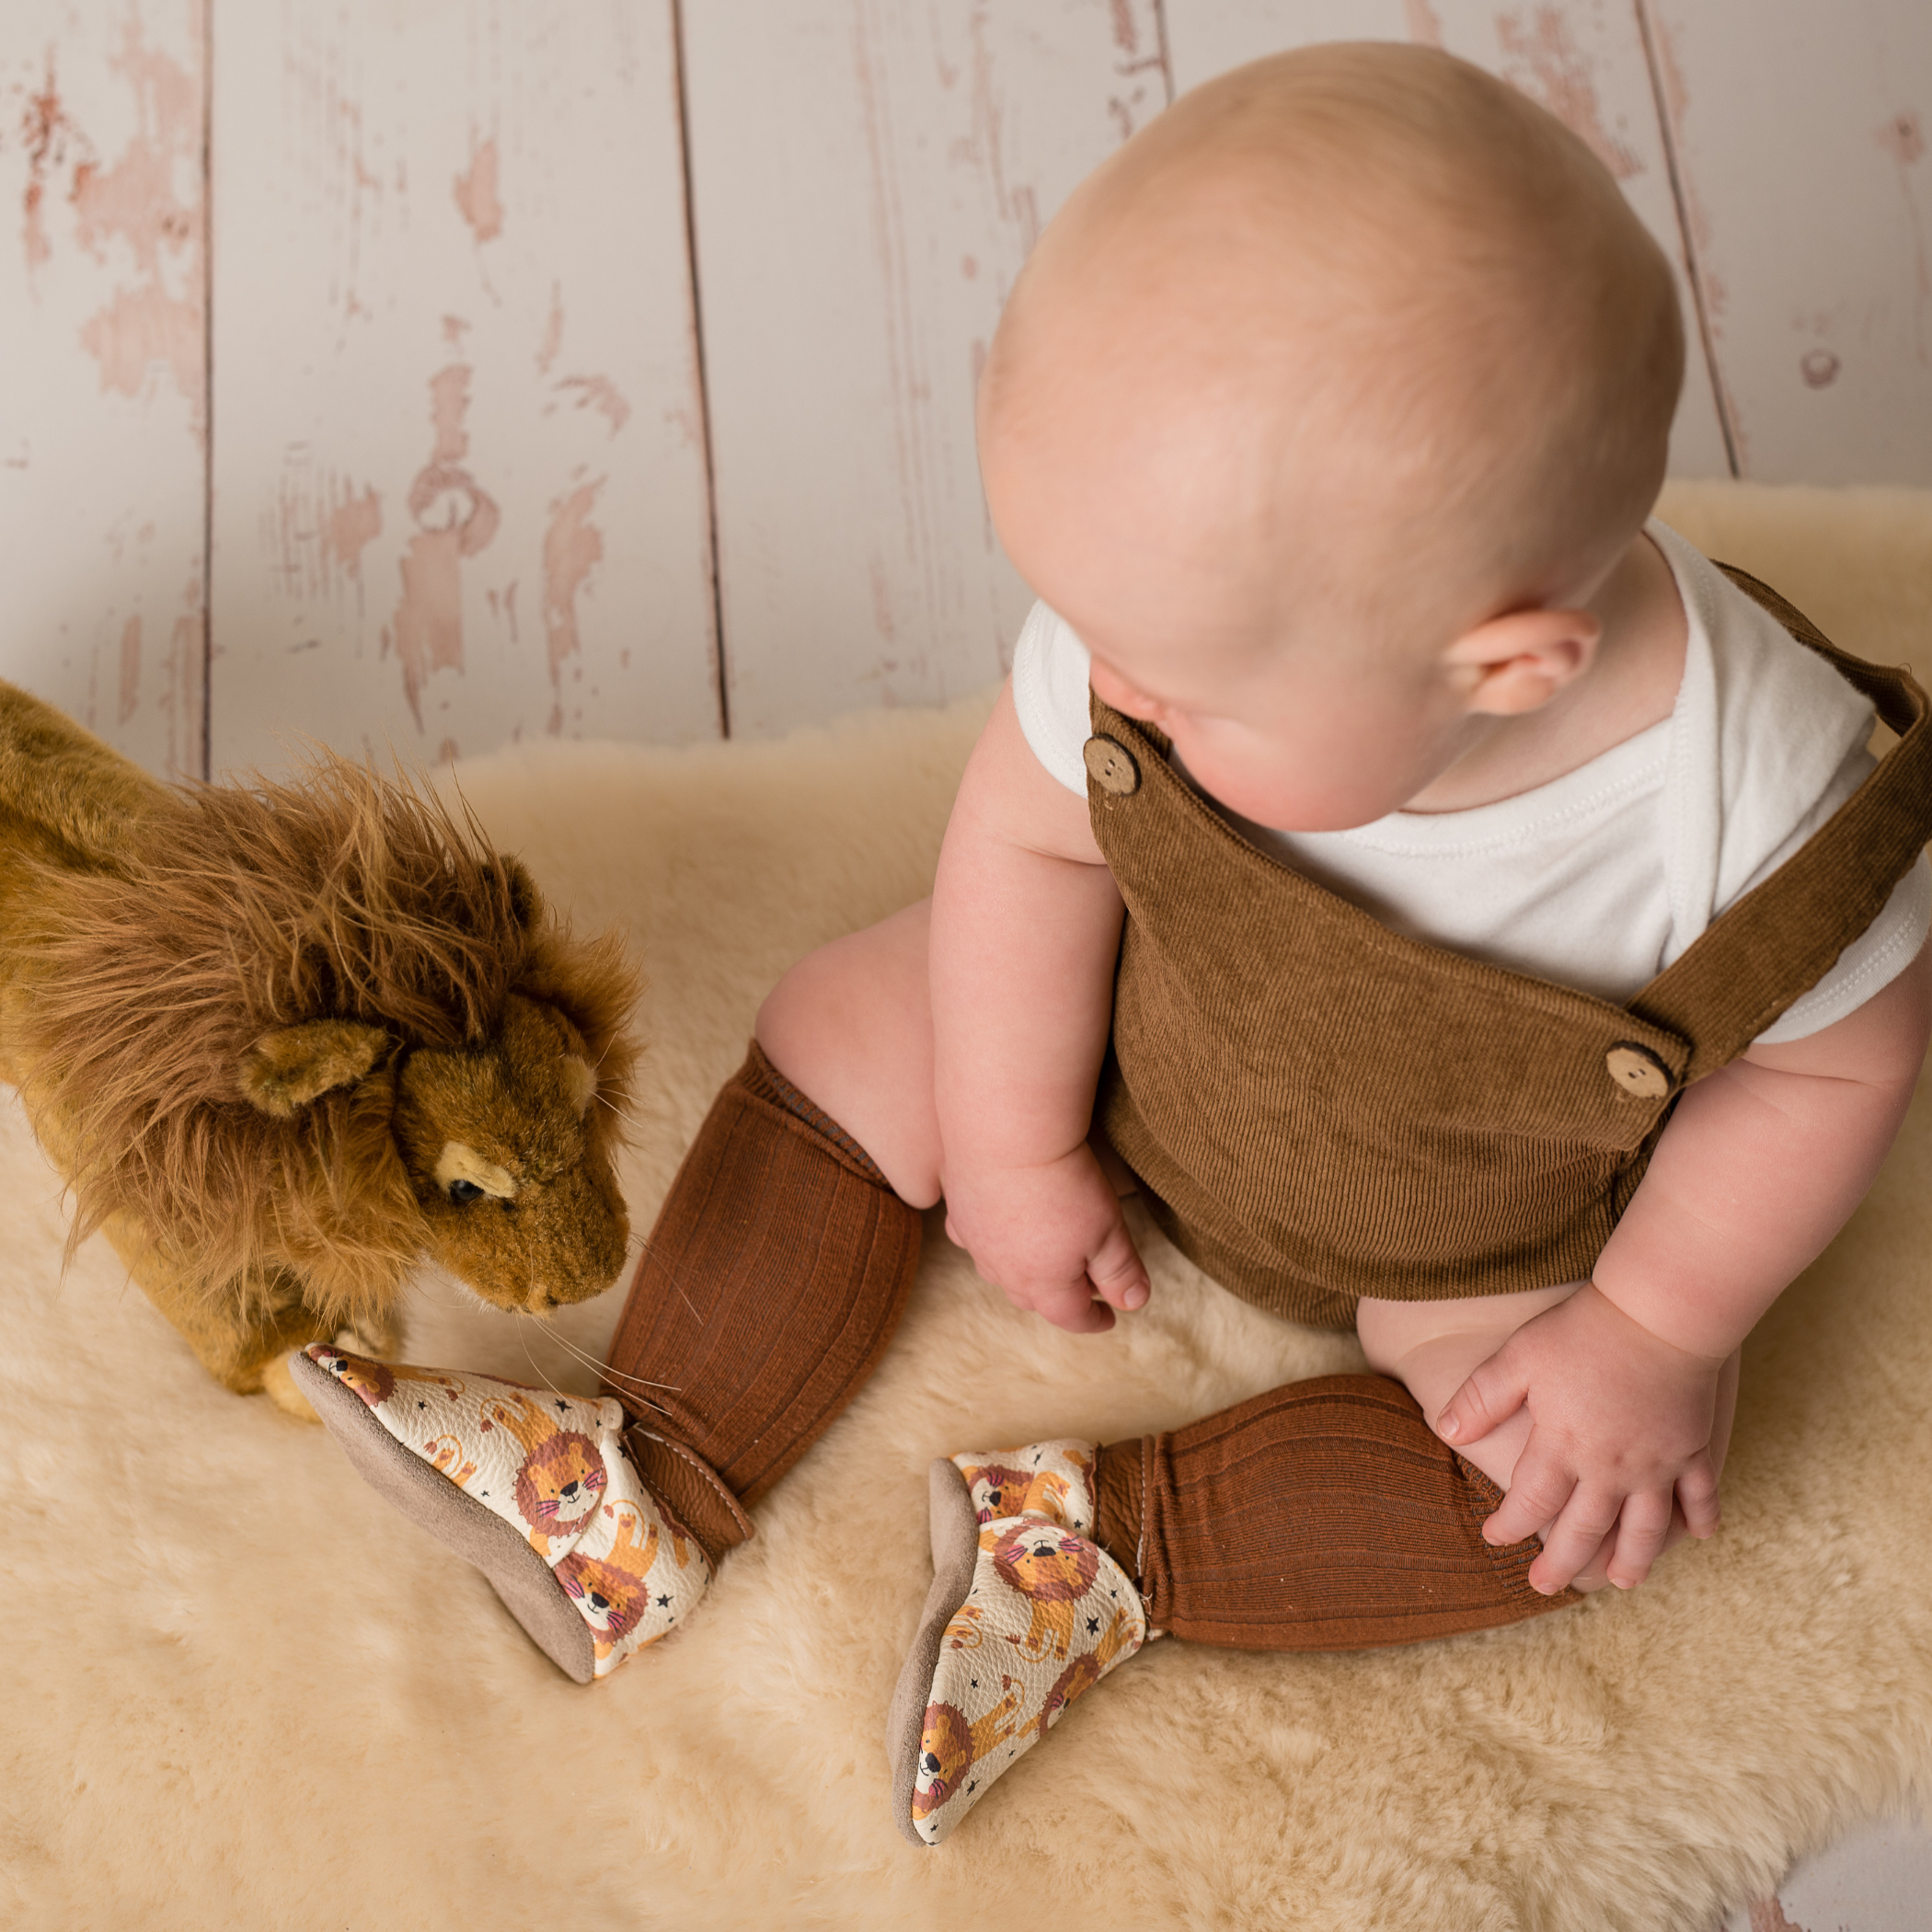 Safari Baby Shoes